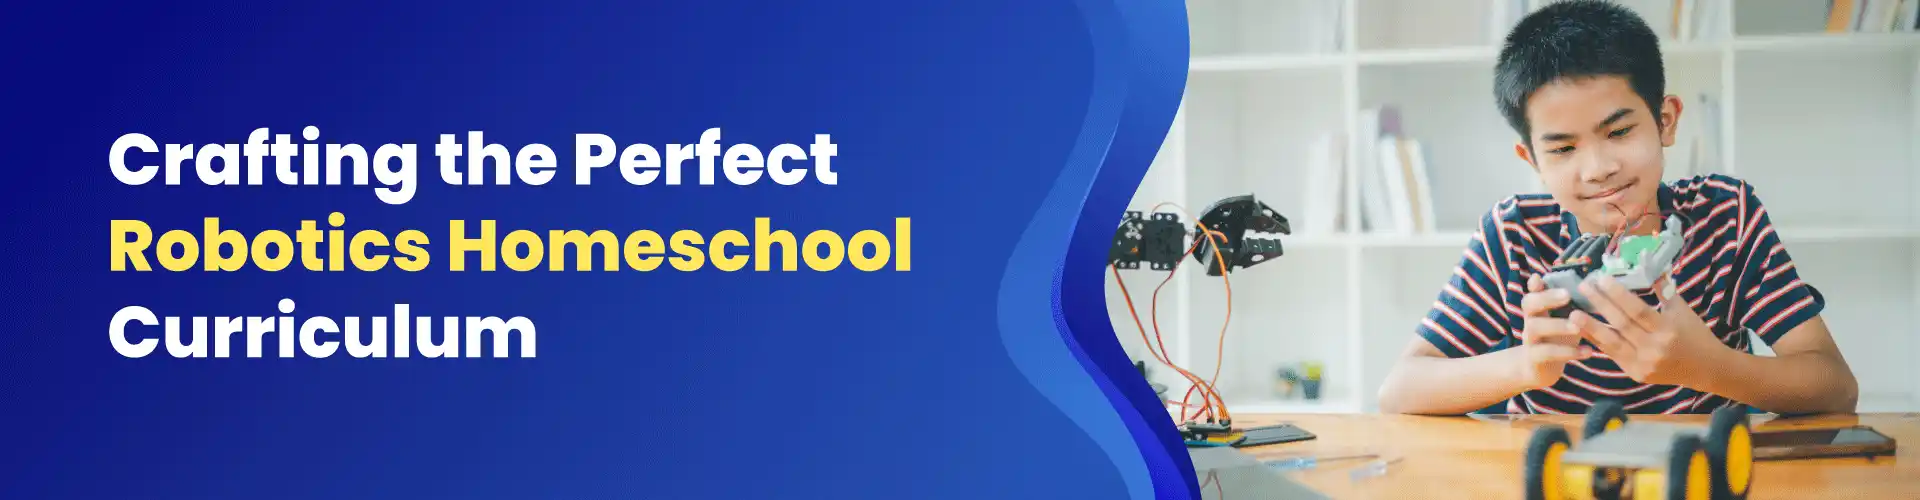 Crafting The Perfect Robotics Homeschool Curriculum